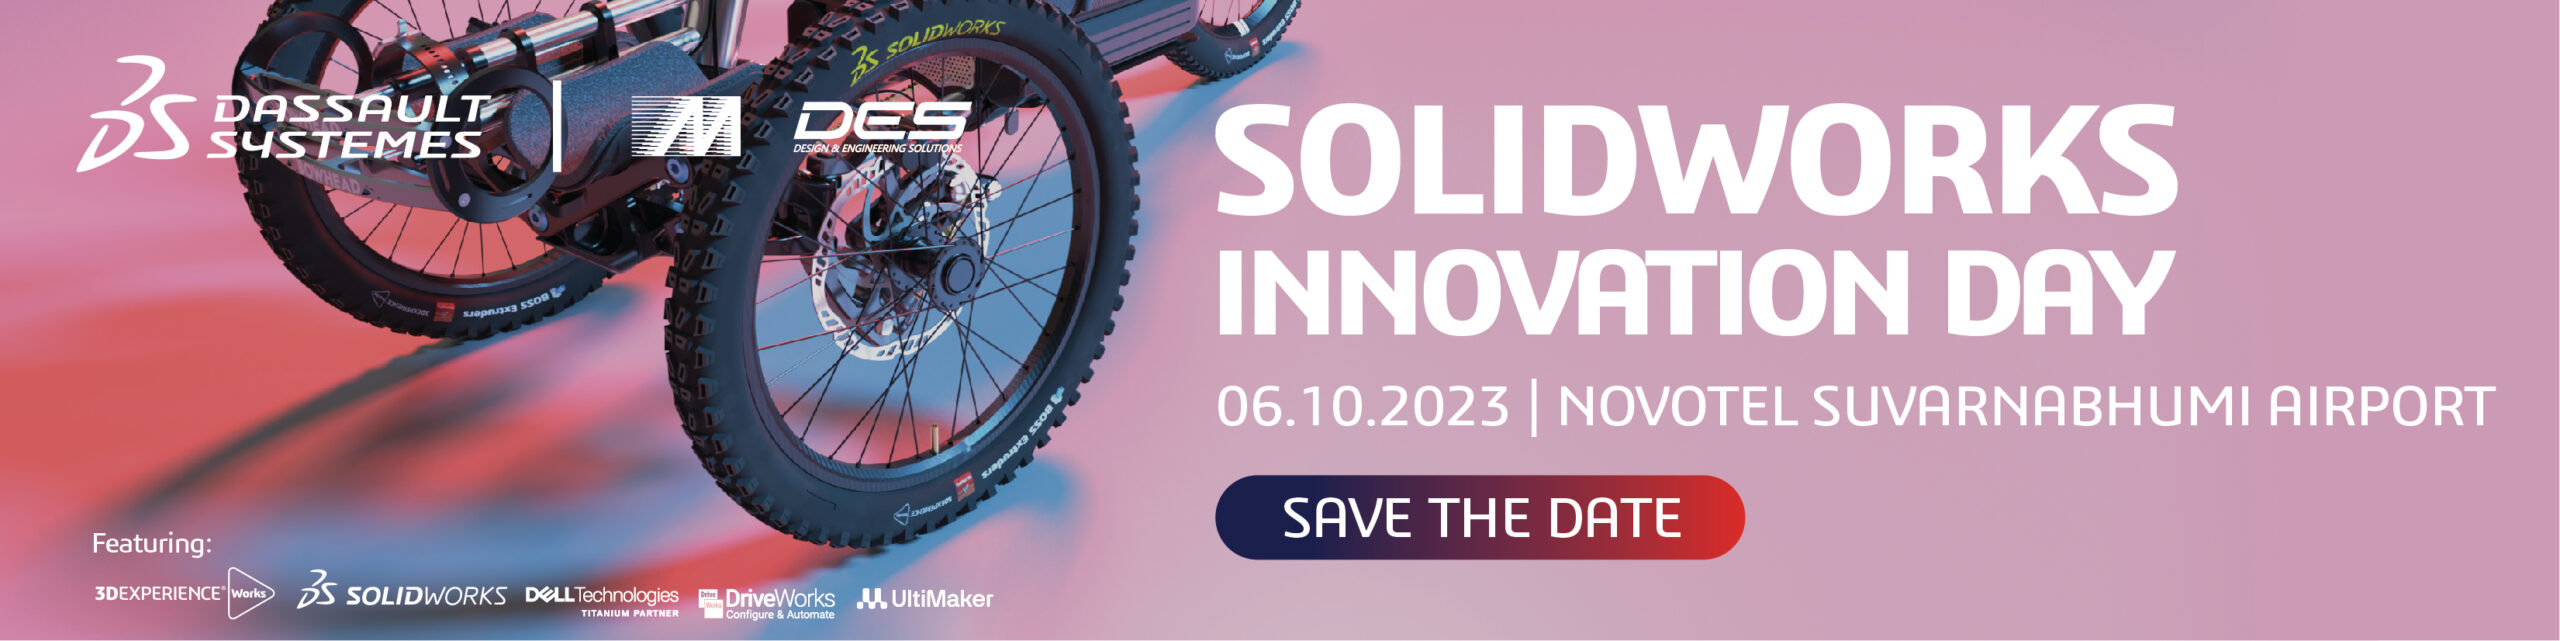 SOLIDWORKS Innovation Day 2024 MetrosystemsDES